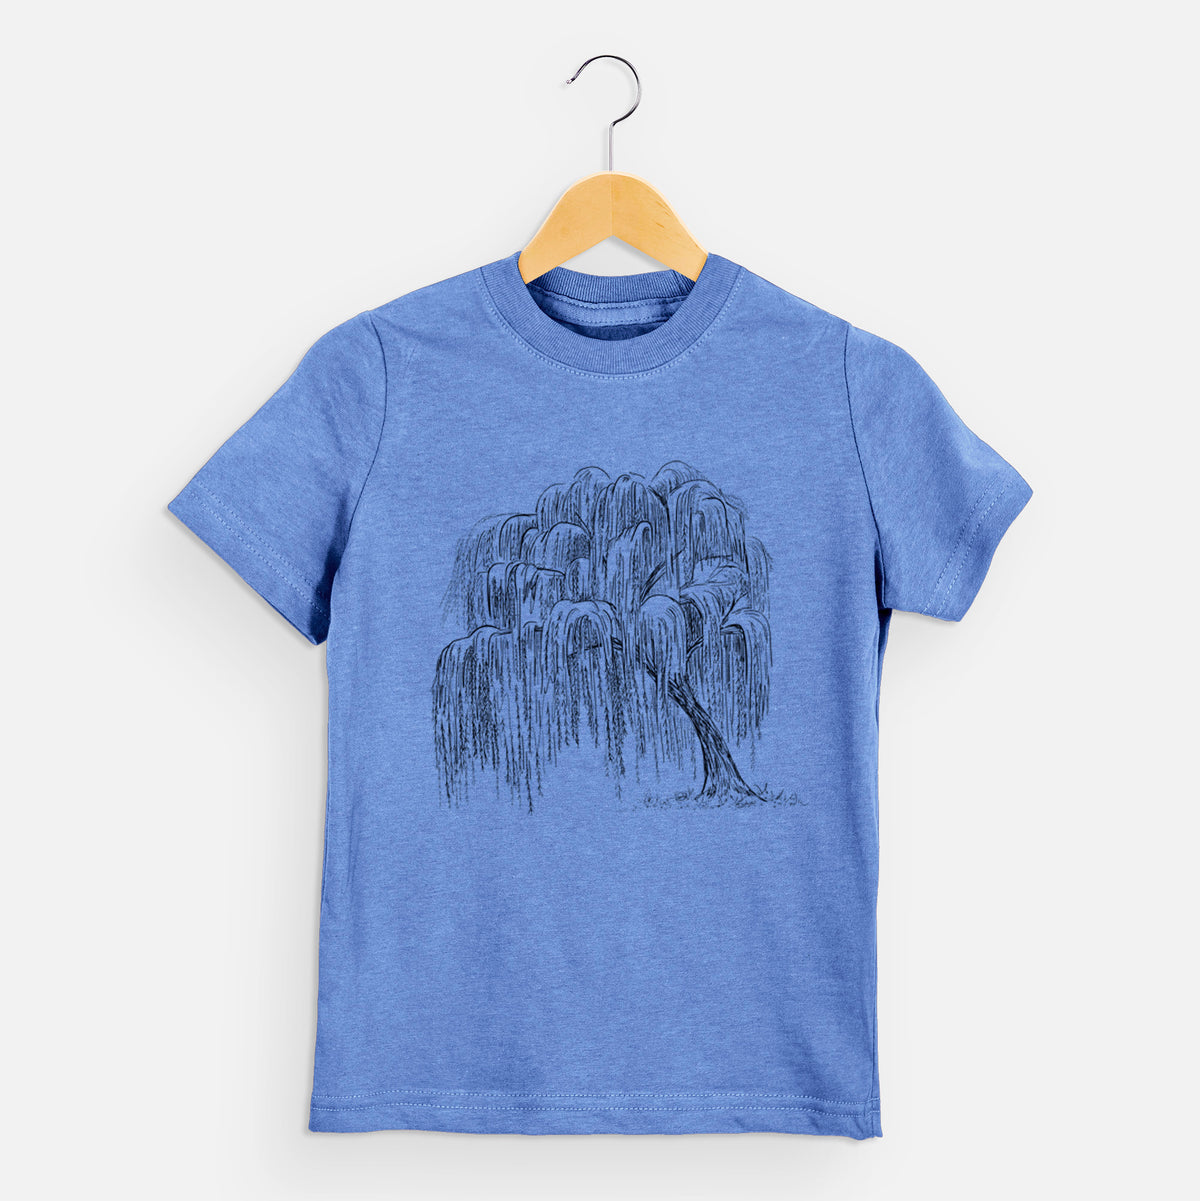 Weeping Willow - Salix babylonica - Kids Shirt